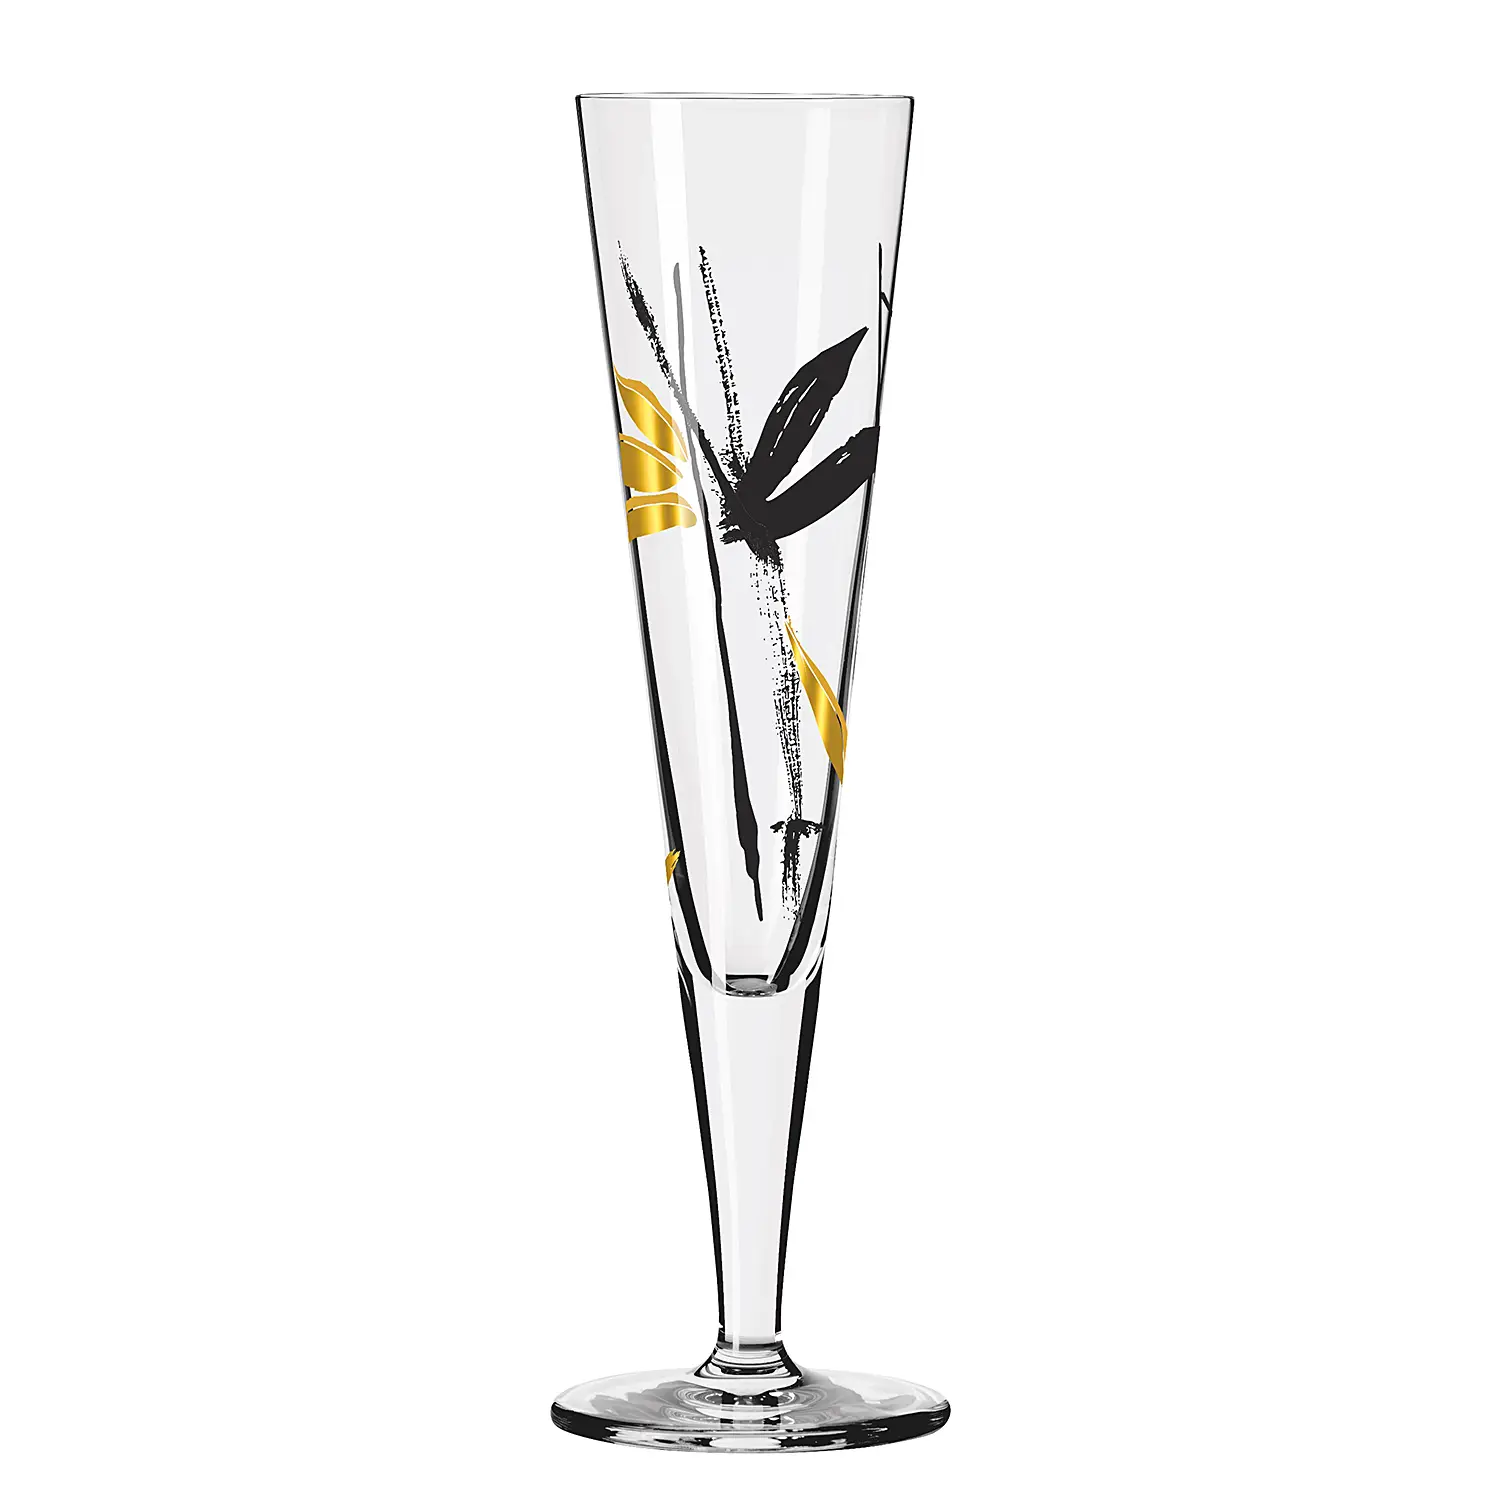 Goldnacht Champagnerglas IV